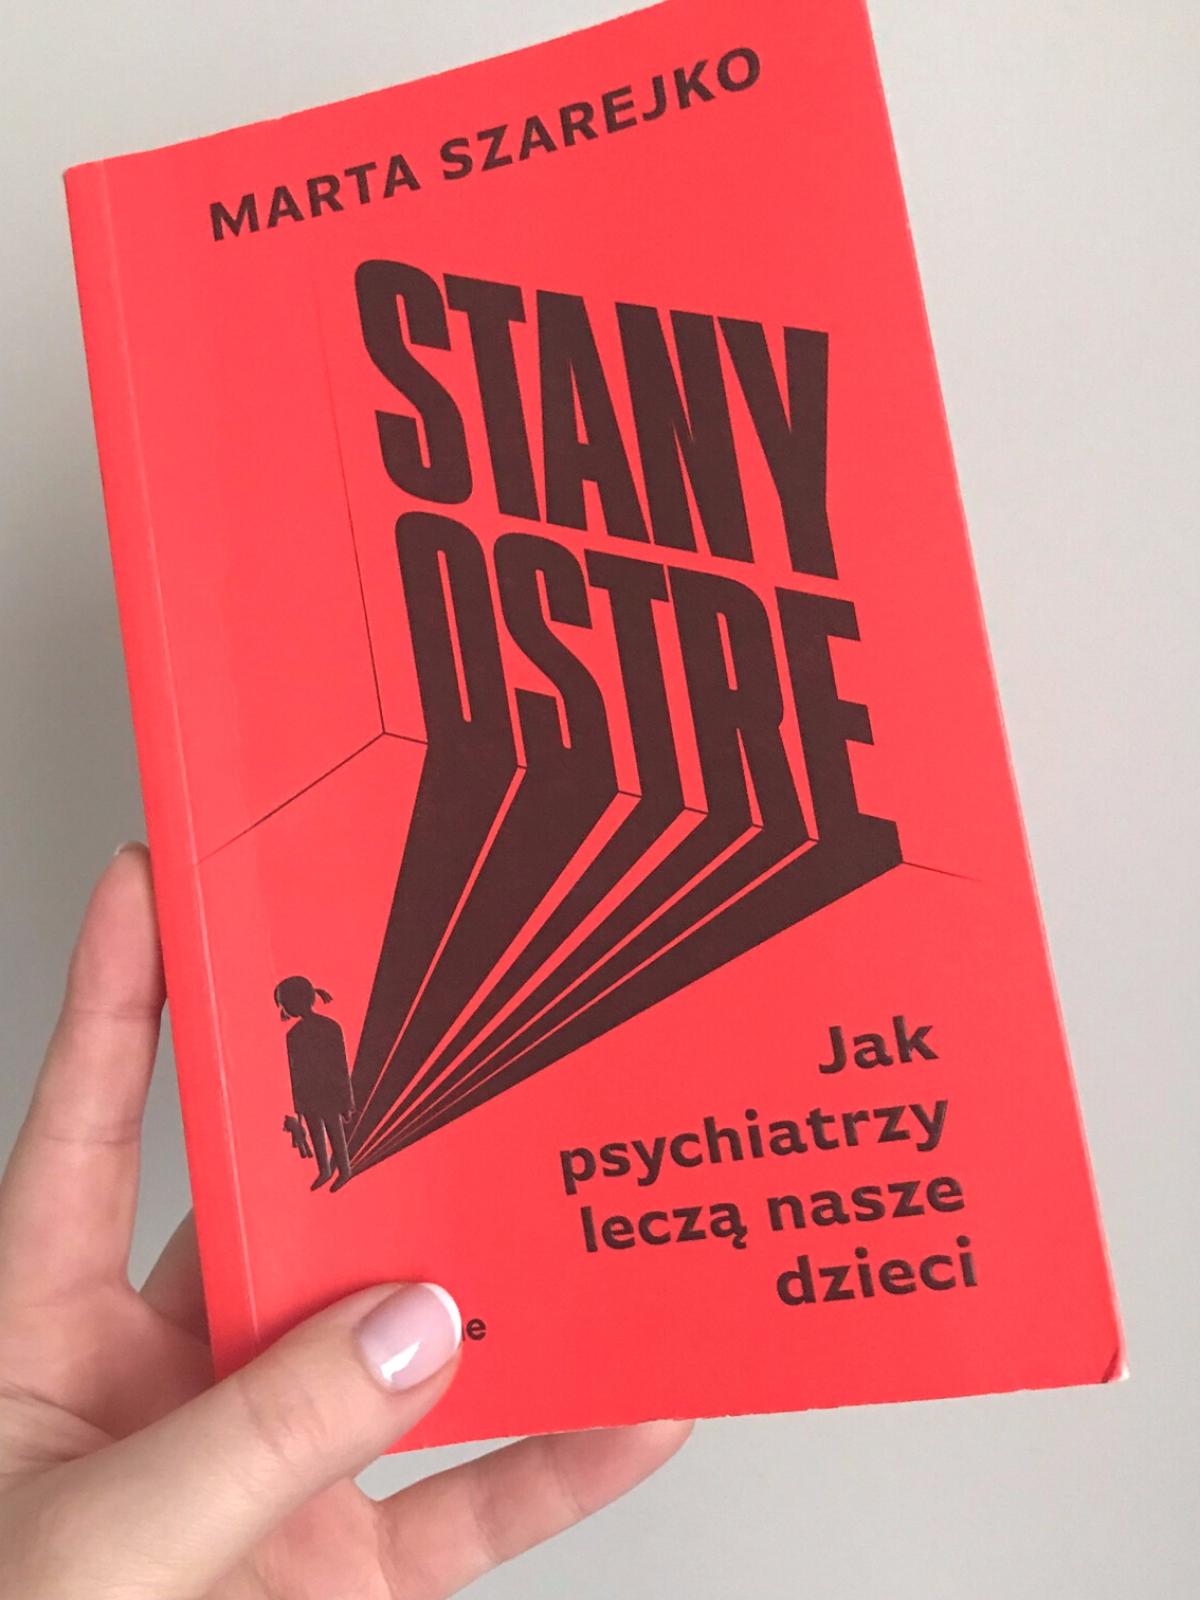 Marta Szarejko, Stany Ostre 